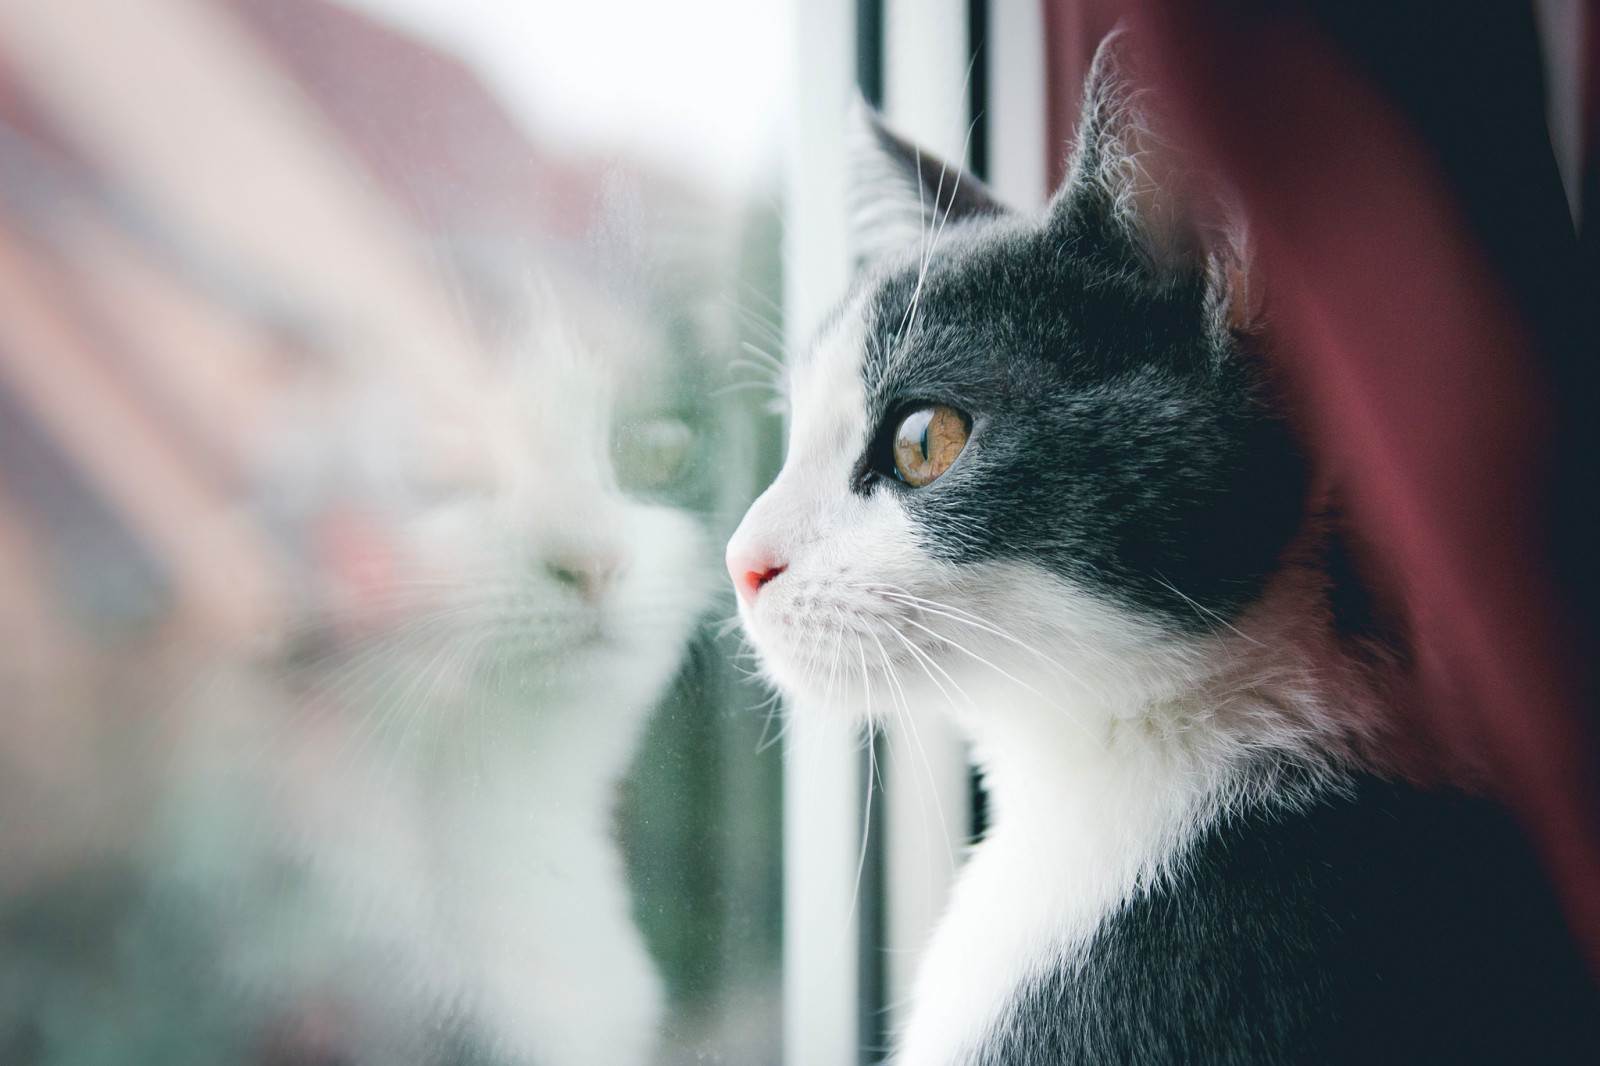 kucing, jendela, kumis, terlihat, Koshak, Kucing jantan